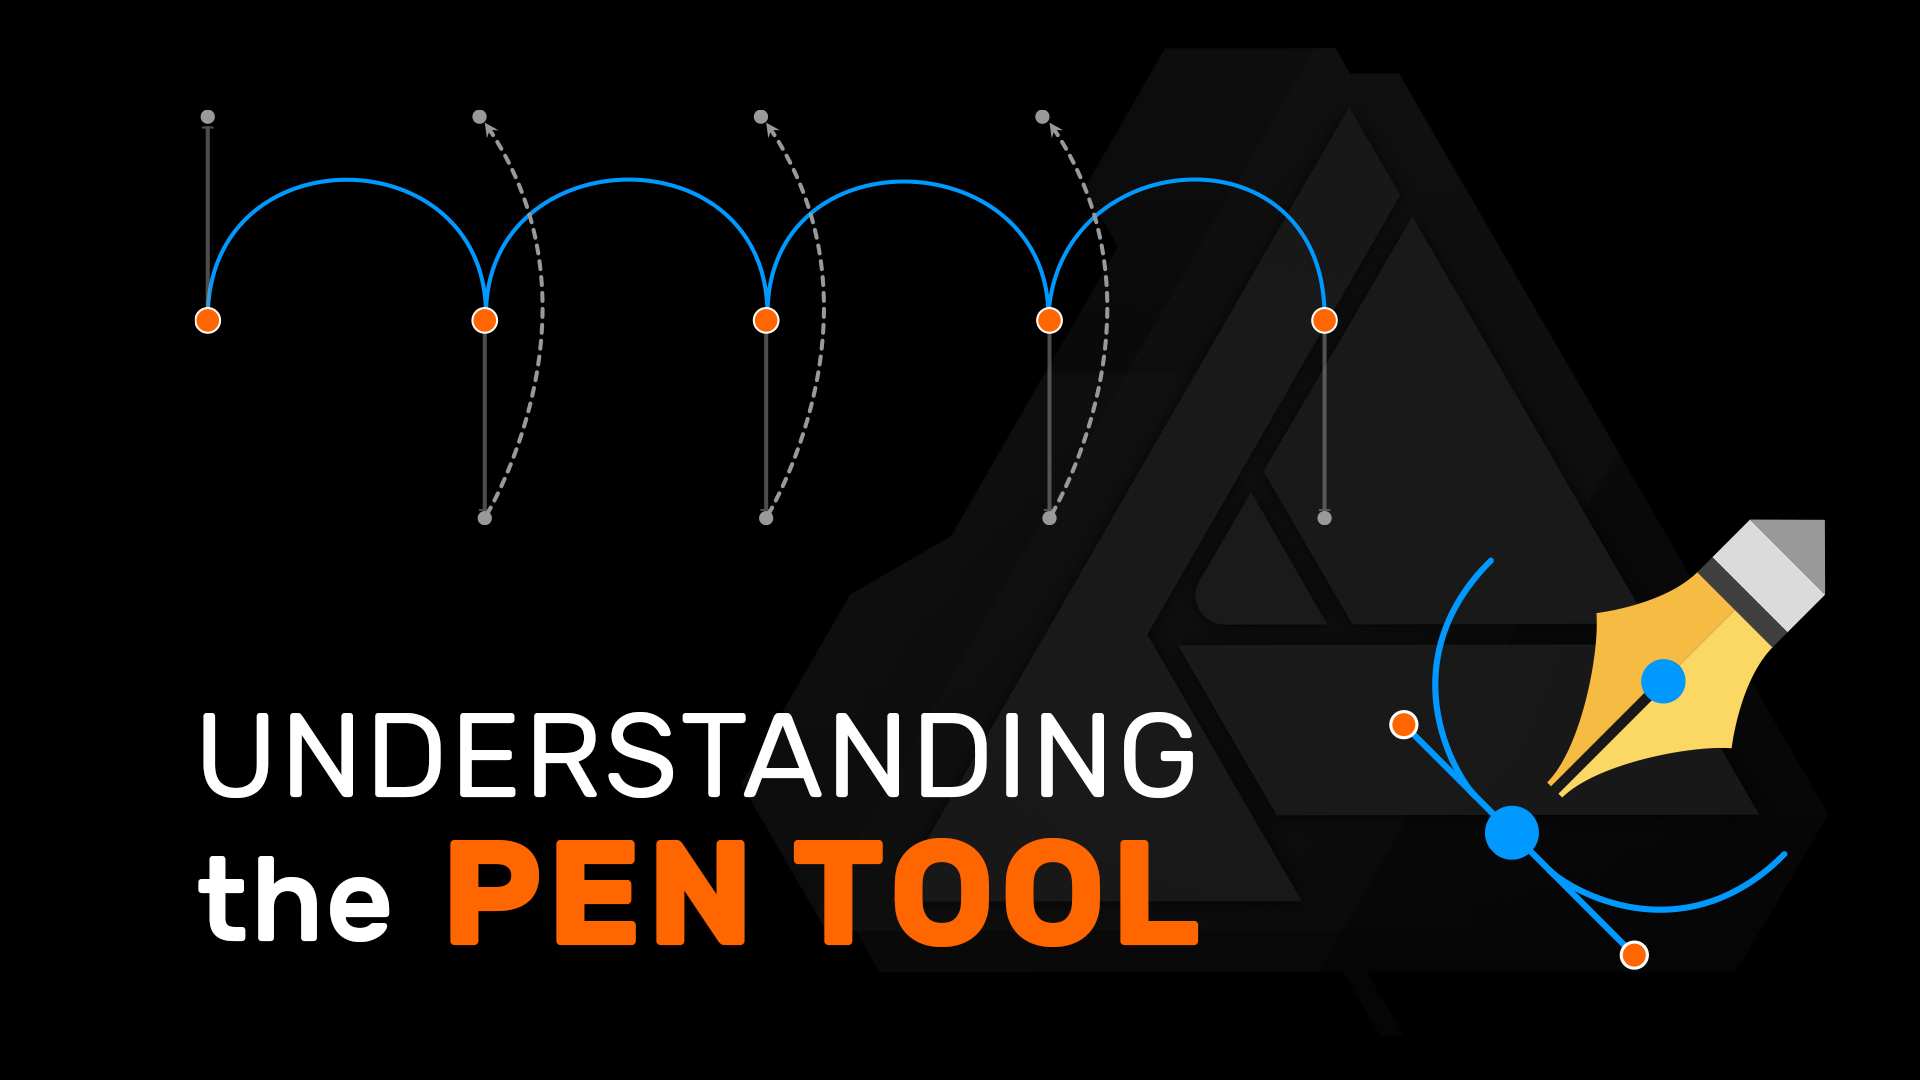 Affinity Designer Pen Tool